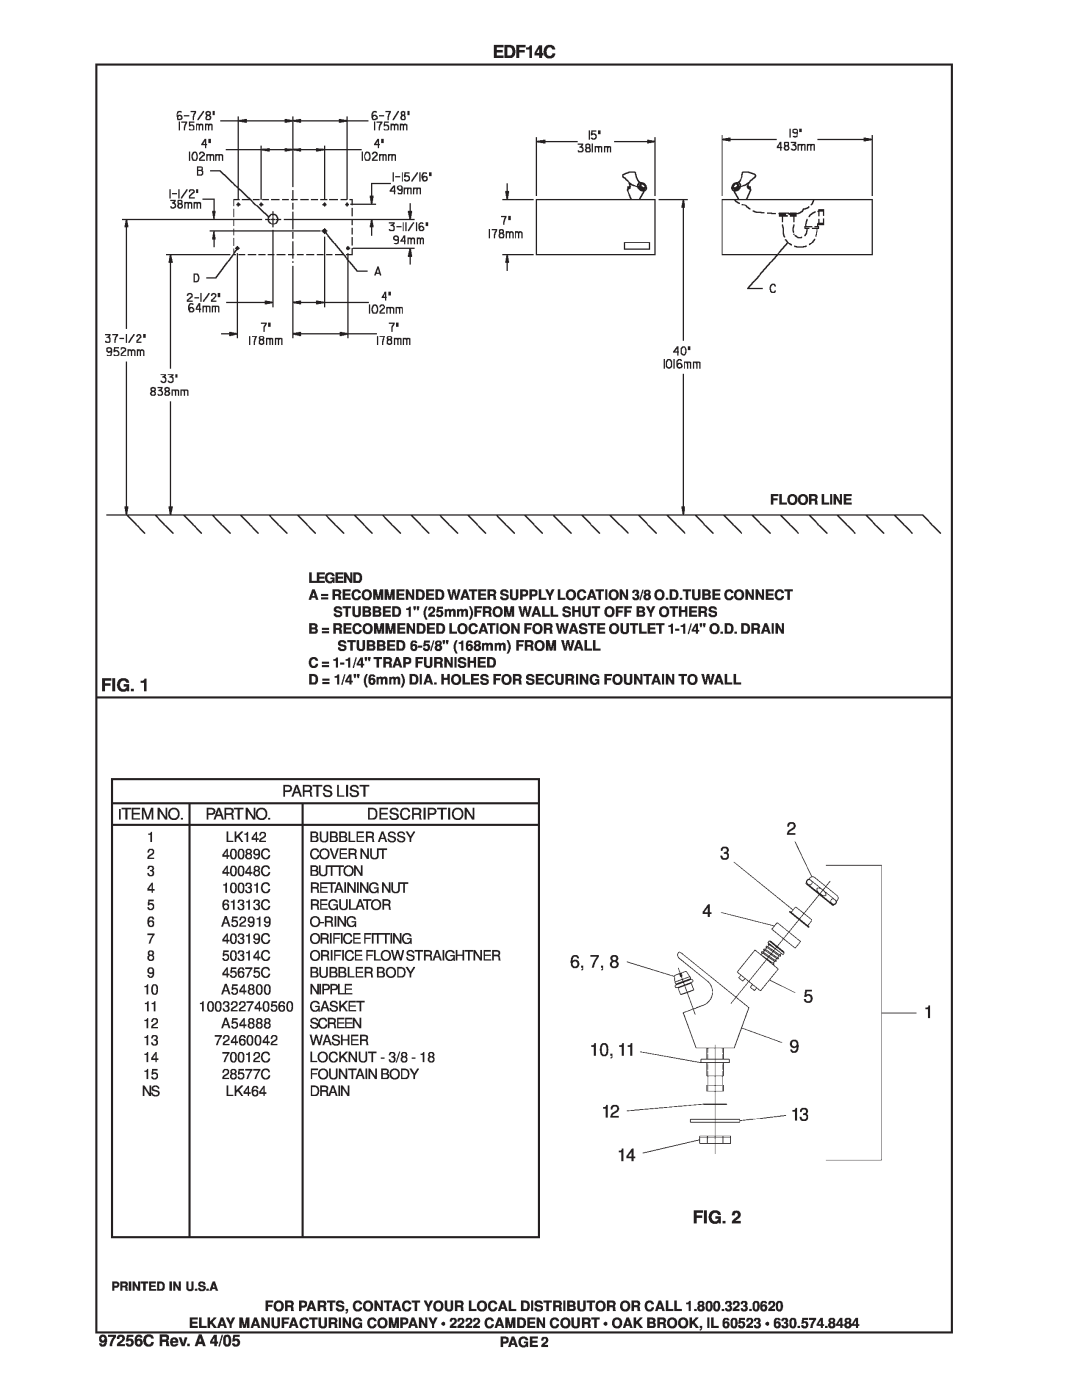 Elkay EDF14C installation instructions Parts List, Item No, Partno, Description, 97256C Rev. A 4/05 